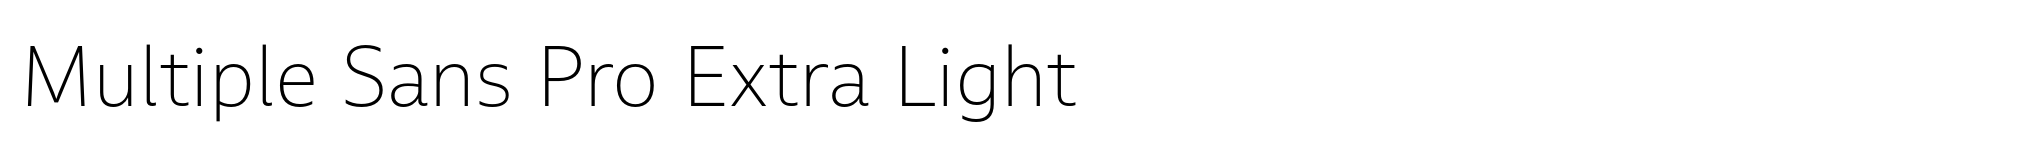 Multiple Sans Pro Extra Light image